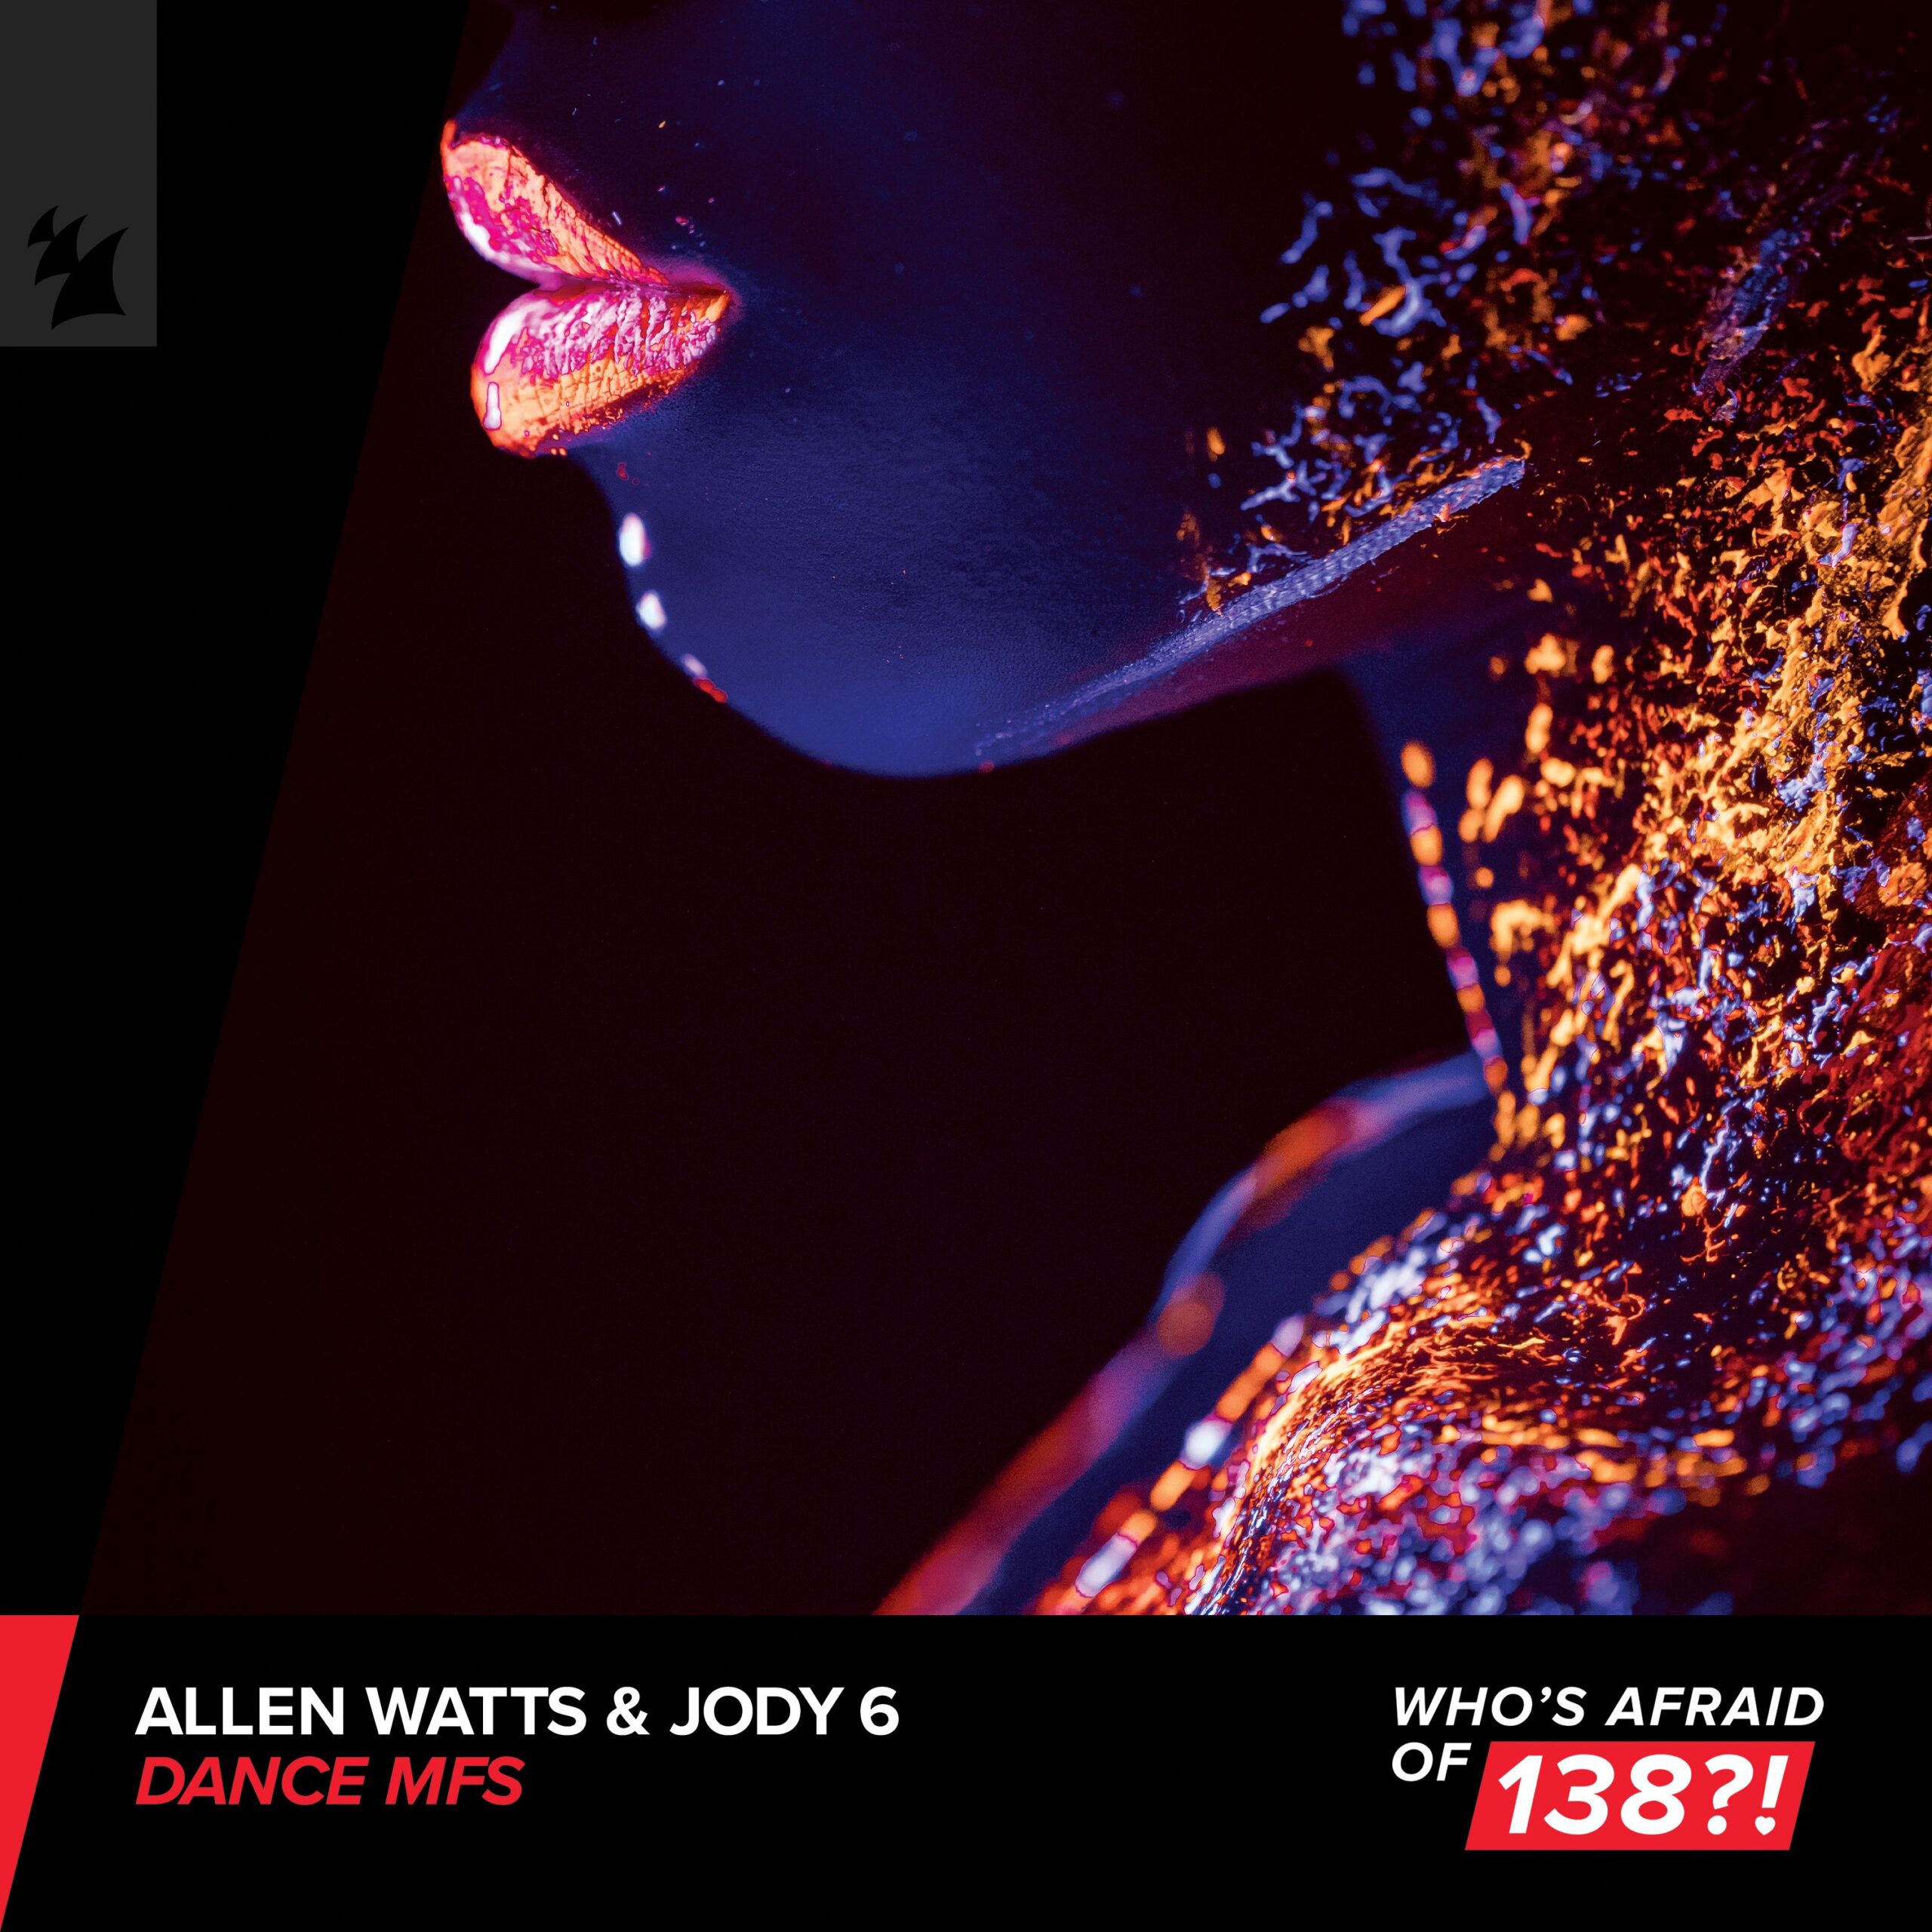 Allen Watts and Jody 6 presents Dance MFS on Who's Afraid Of 138?!